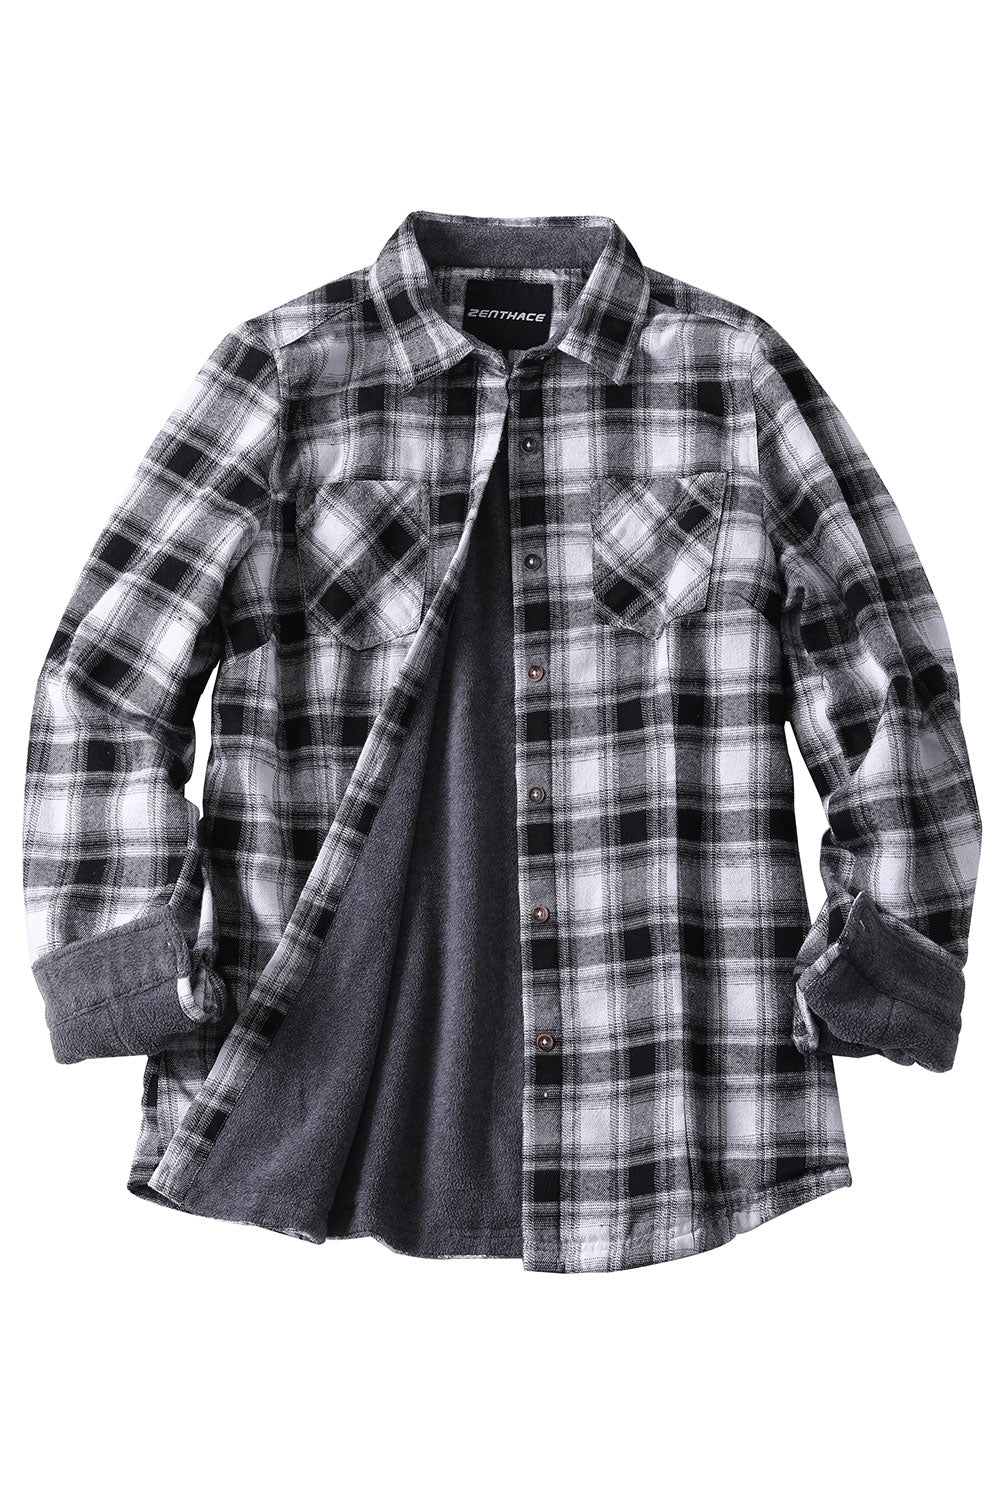 Women's Fleece Lined Plaid Button Down Flannel Shirt Jacket